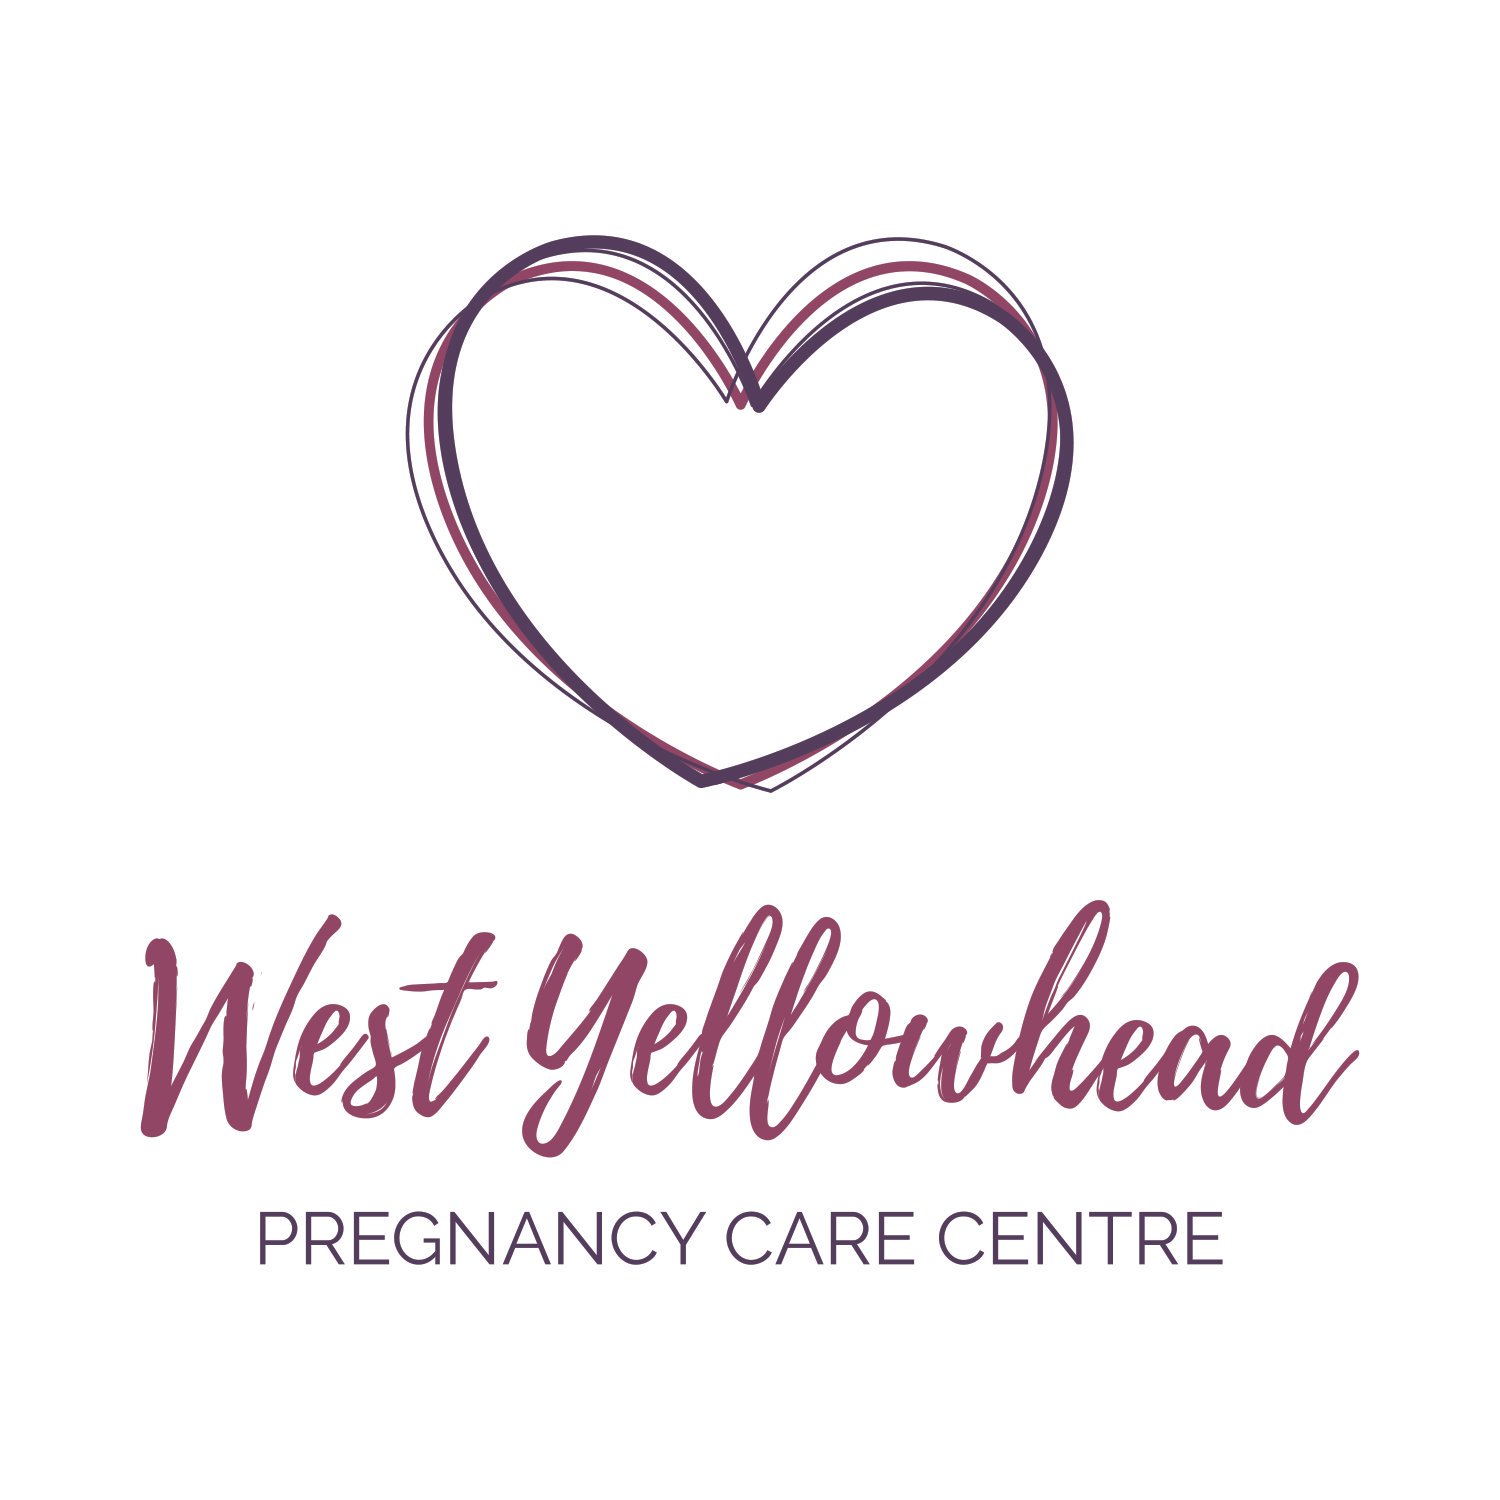 West Yellowhead Pregnancy Care Centre